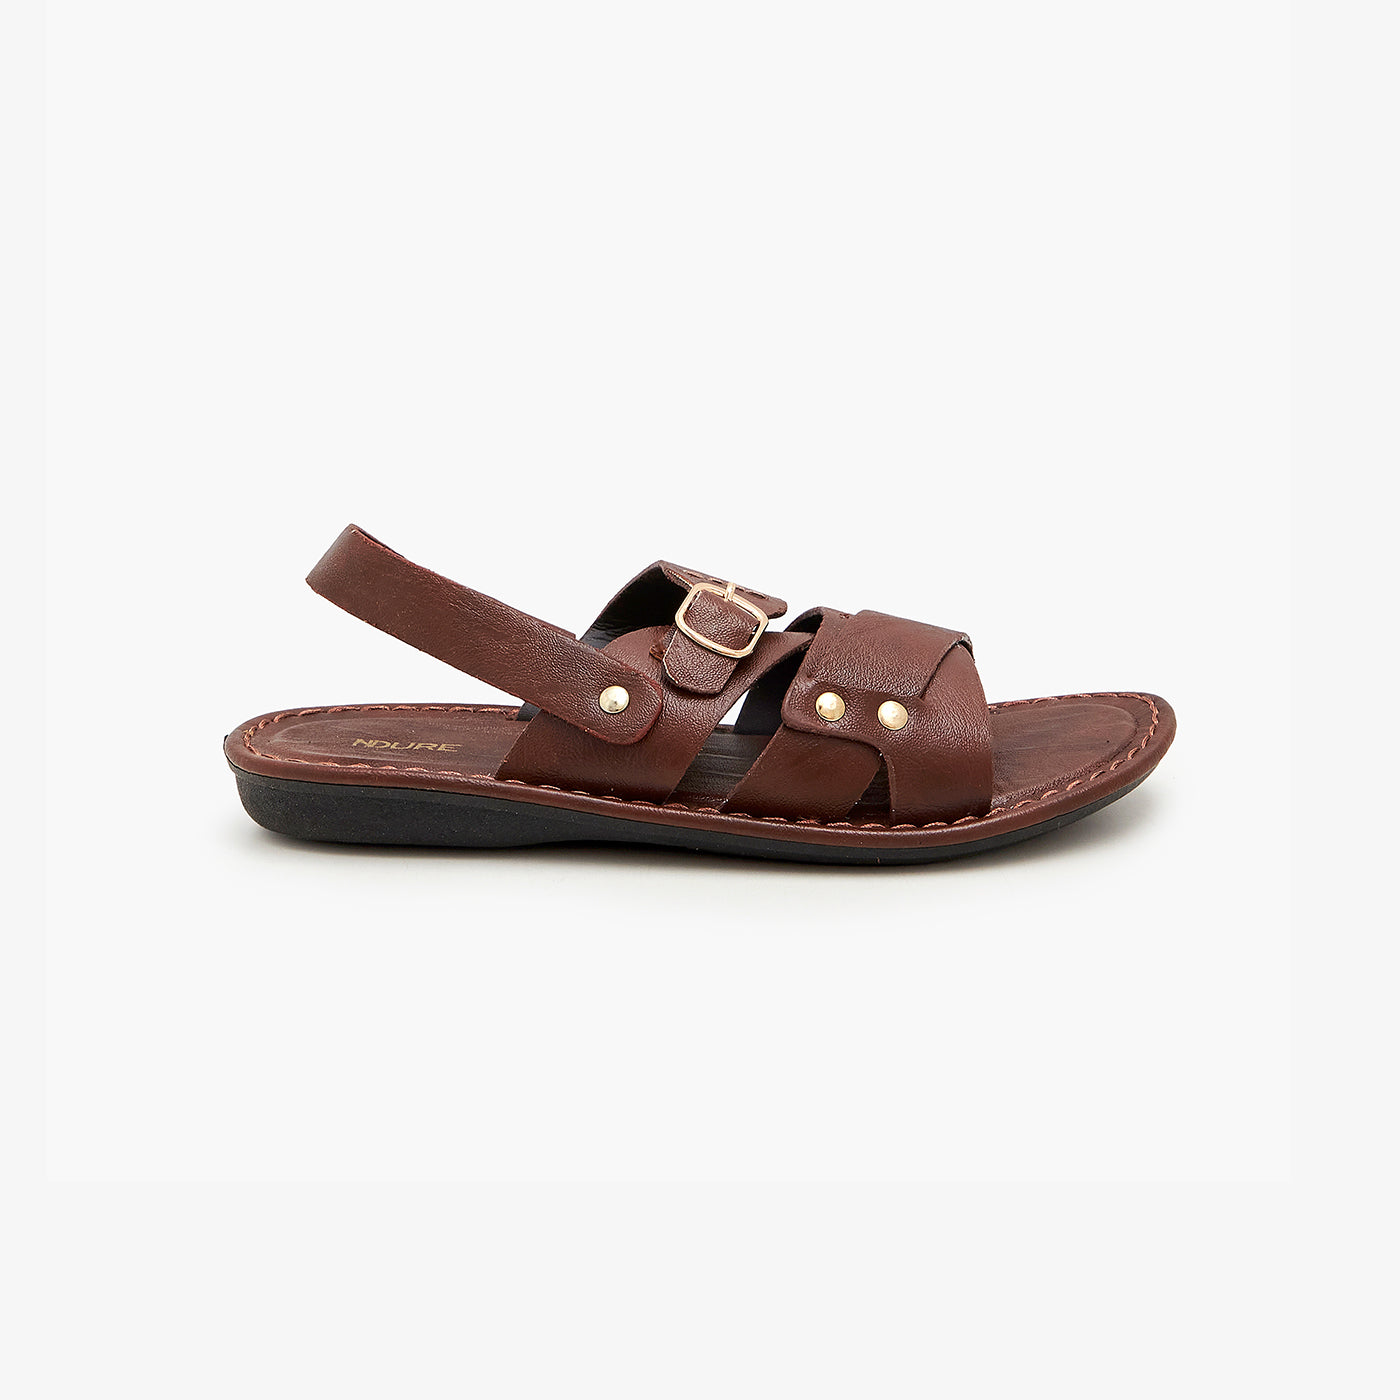 Best sandals price in Pakistan